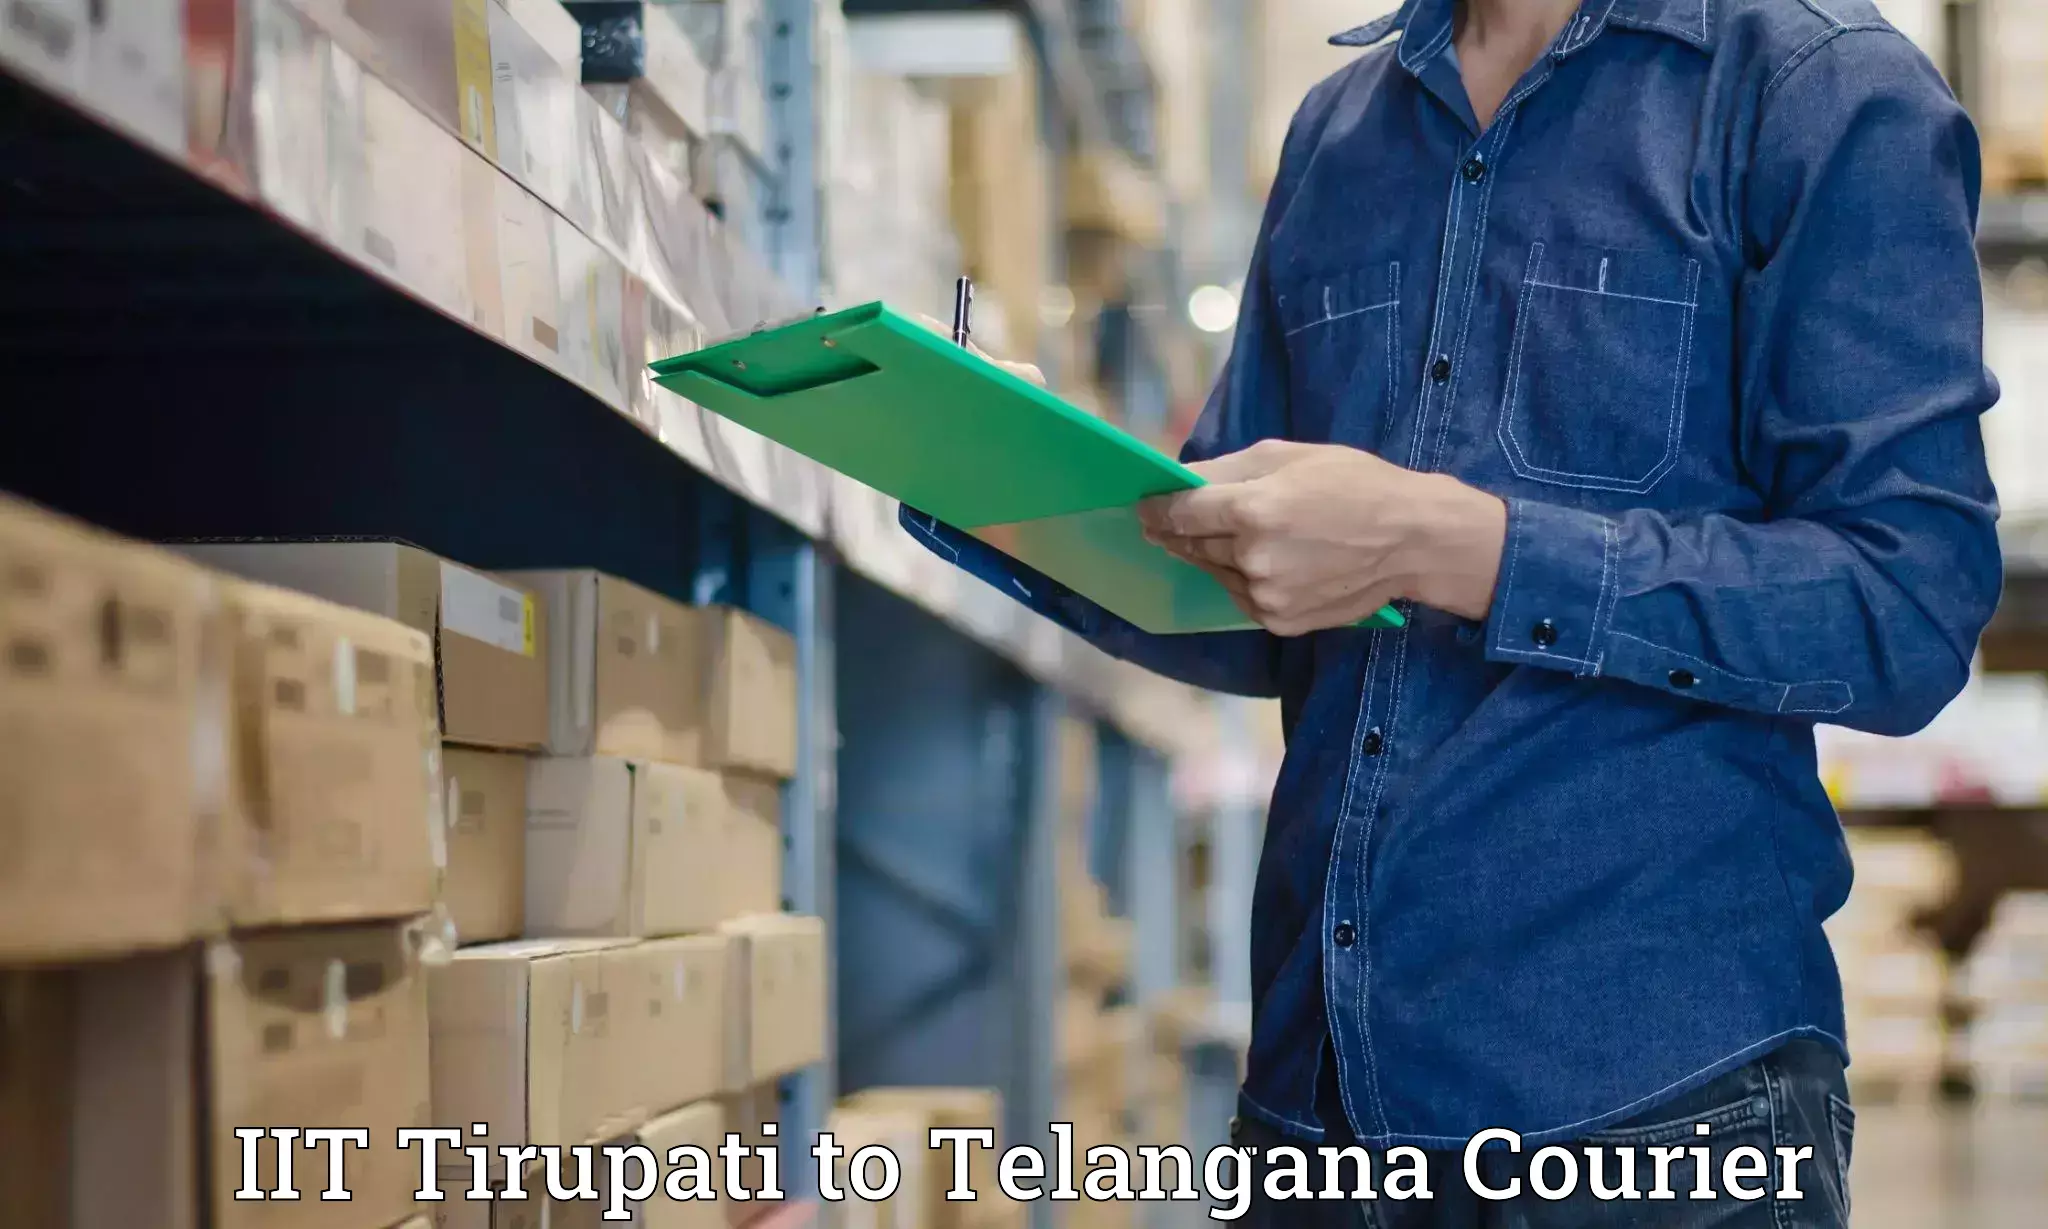 Cargo delivery service IIT Tirupati to Sadashivpet